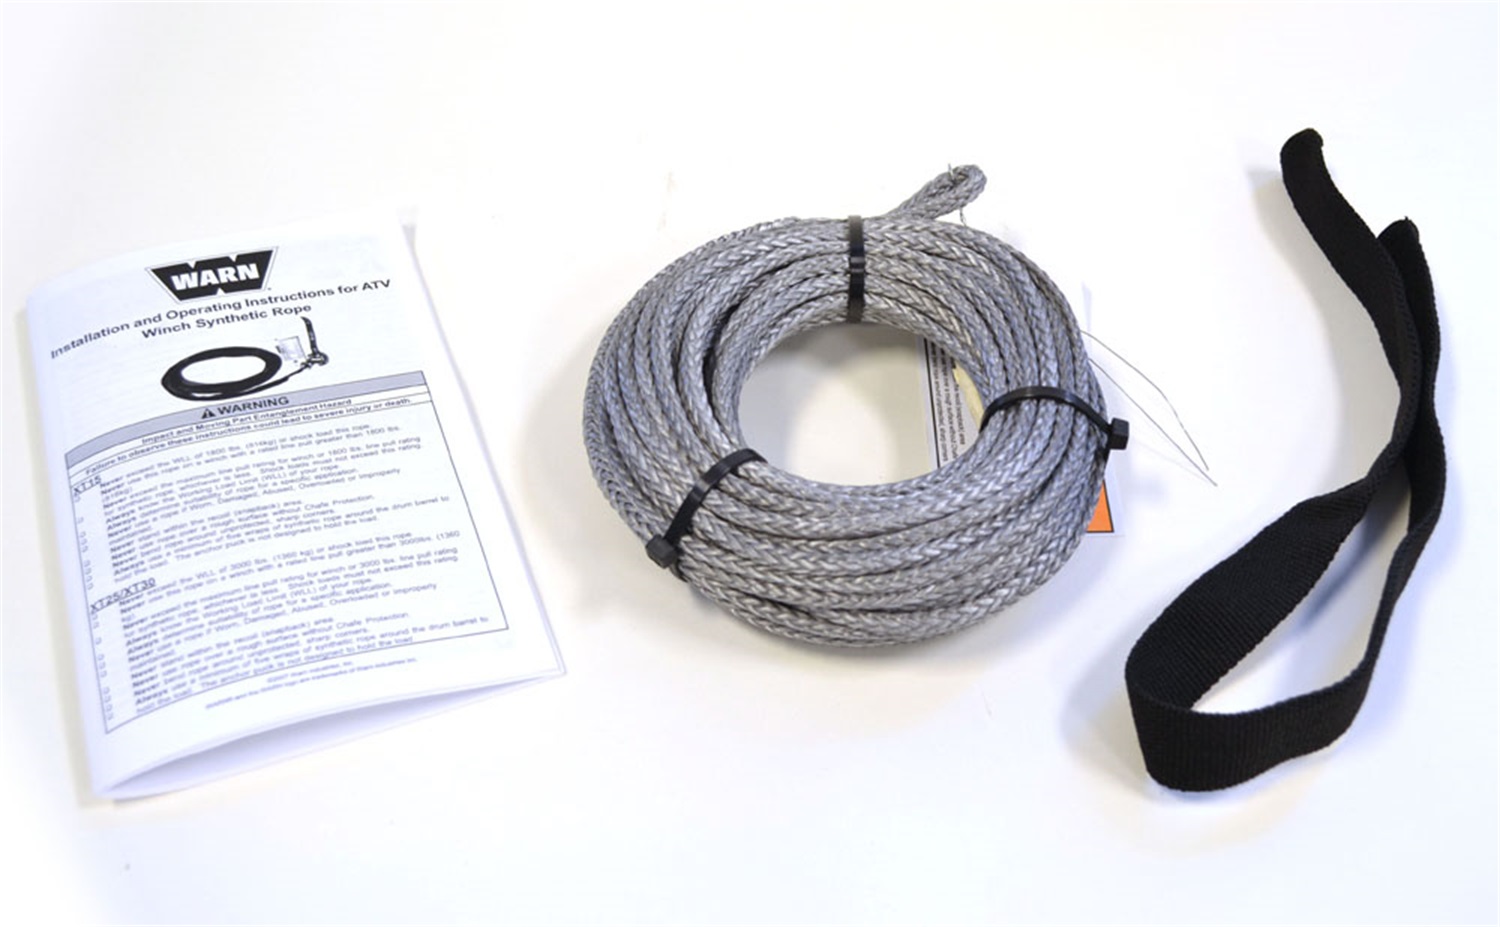 Warn Warn 73599 Synthetic Rope Service Kit